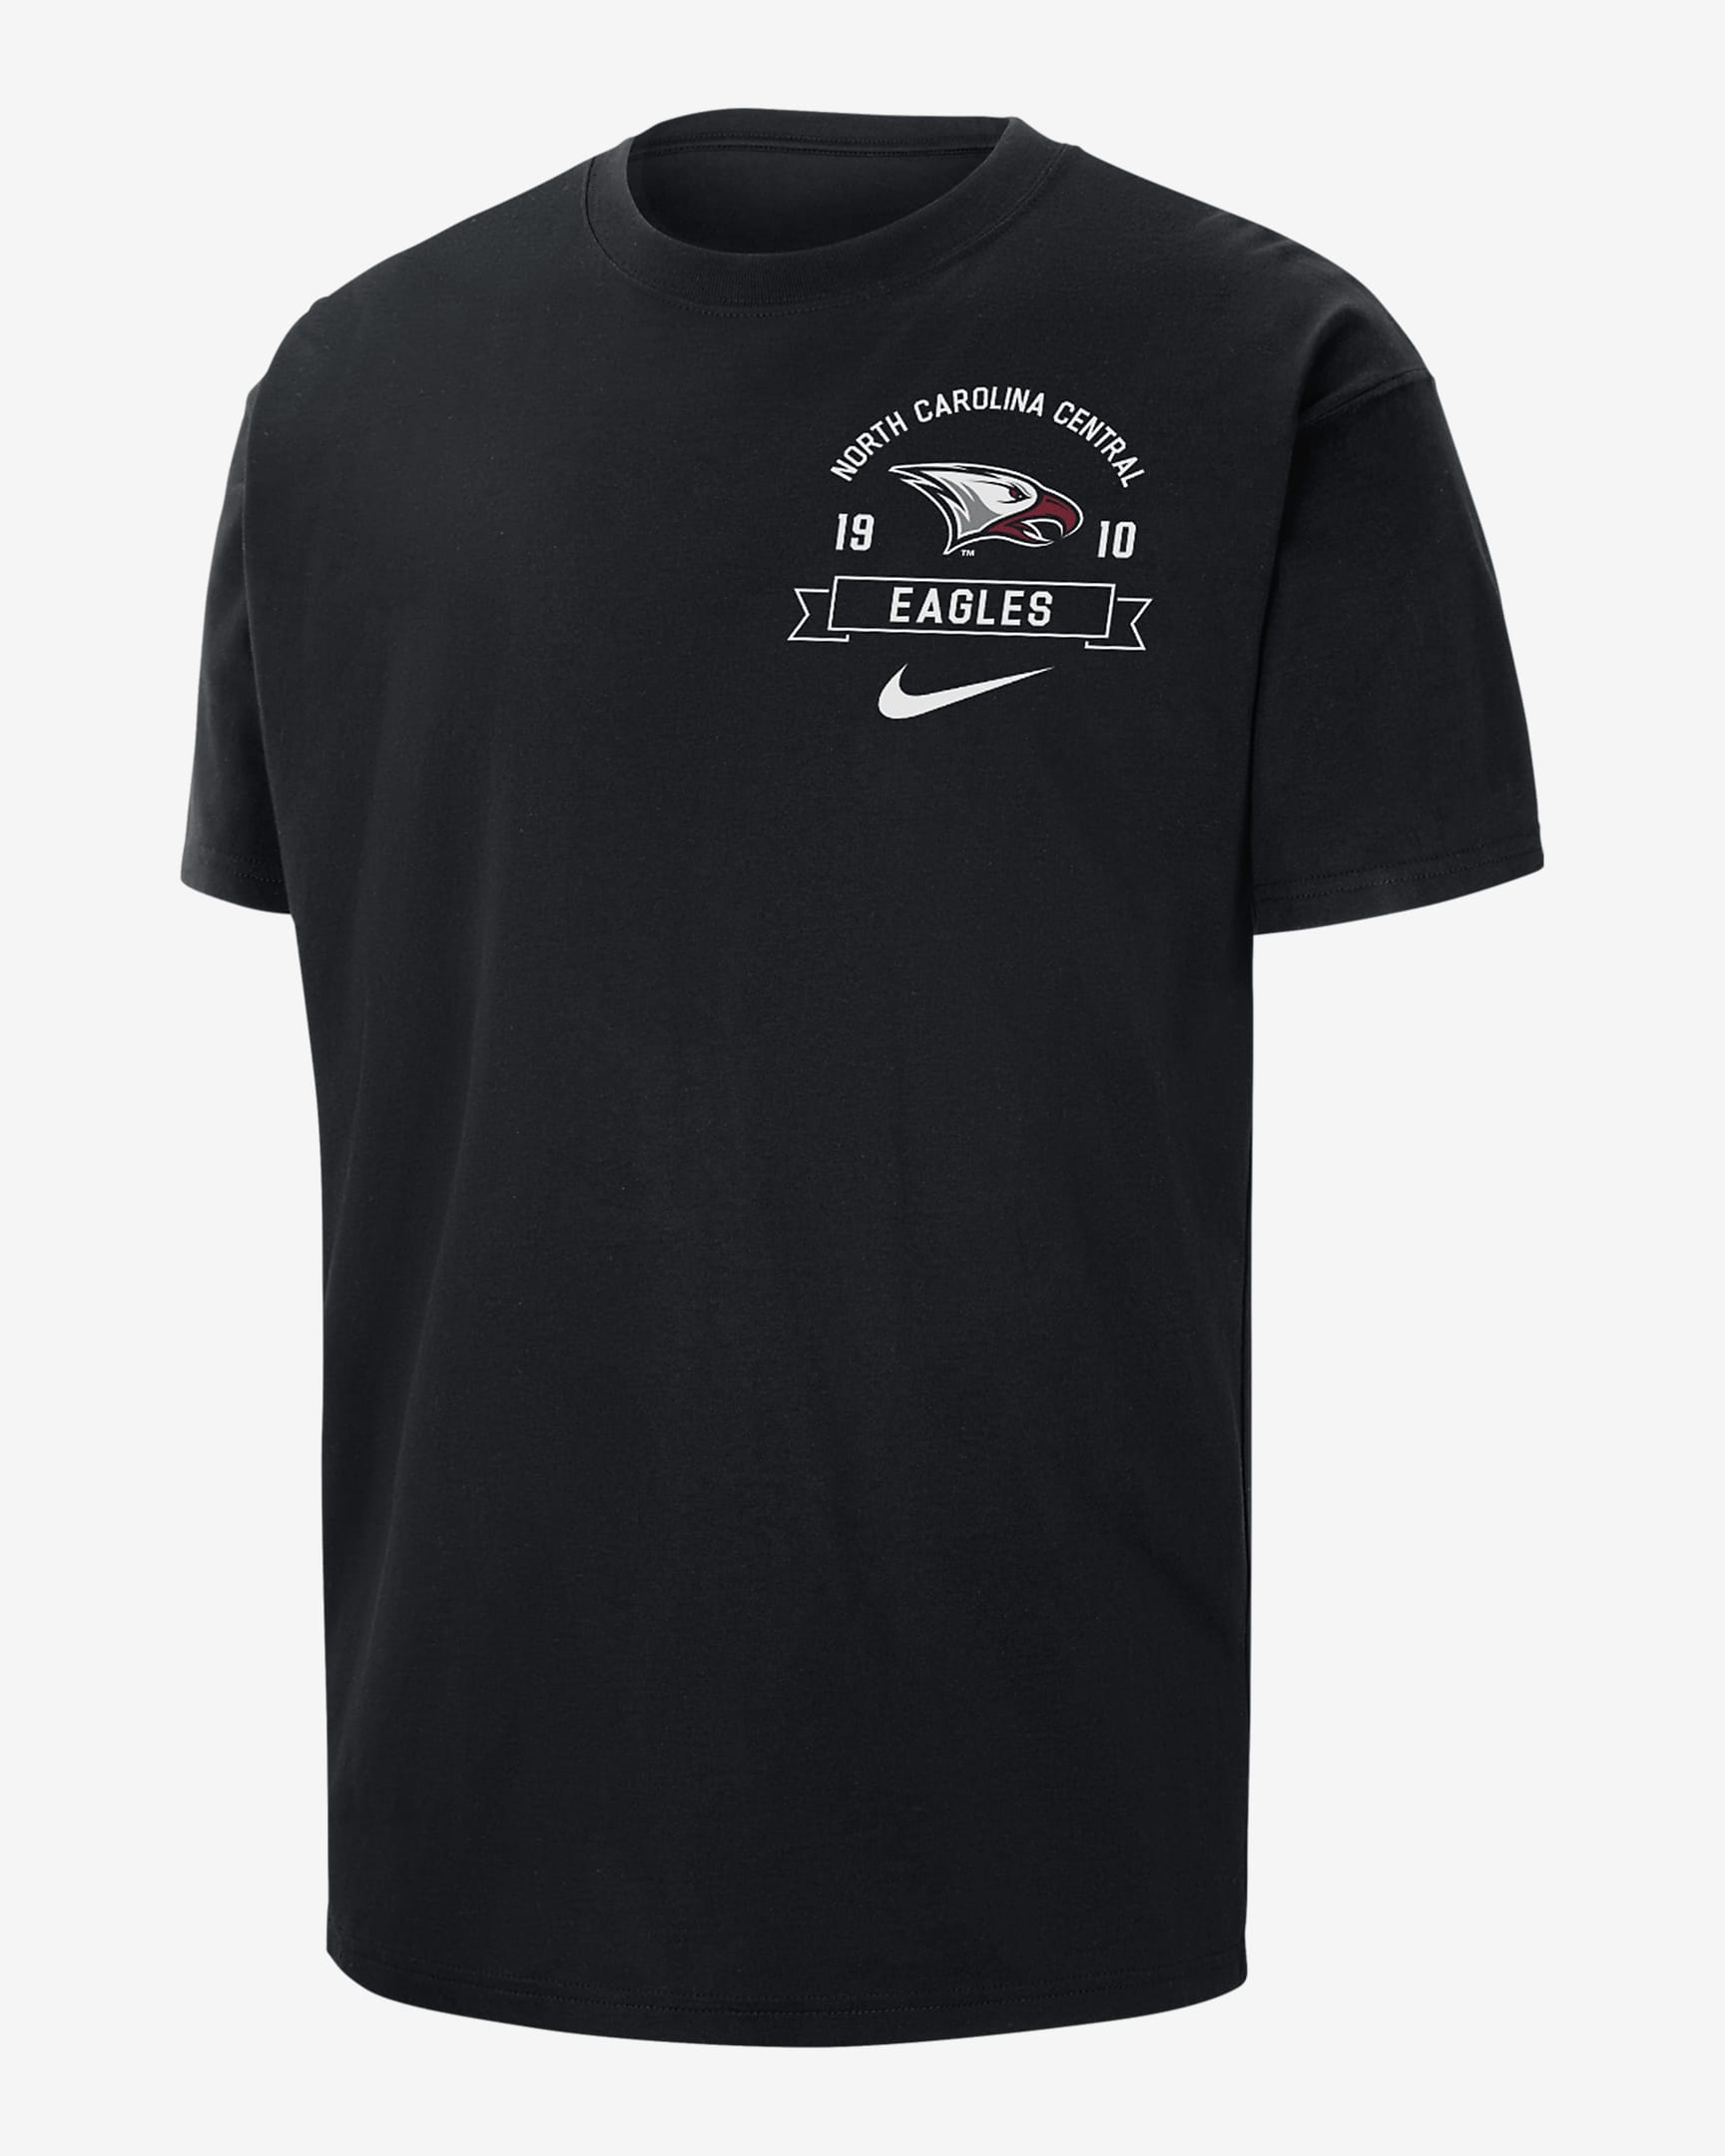 North Carolina Central Max90 Men's Nike College T-Shirt. Nike.com